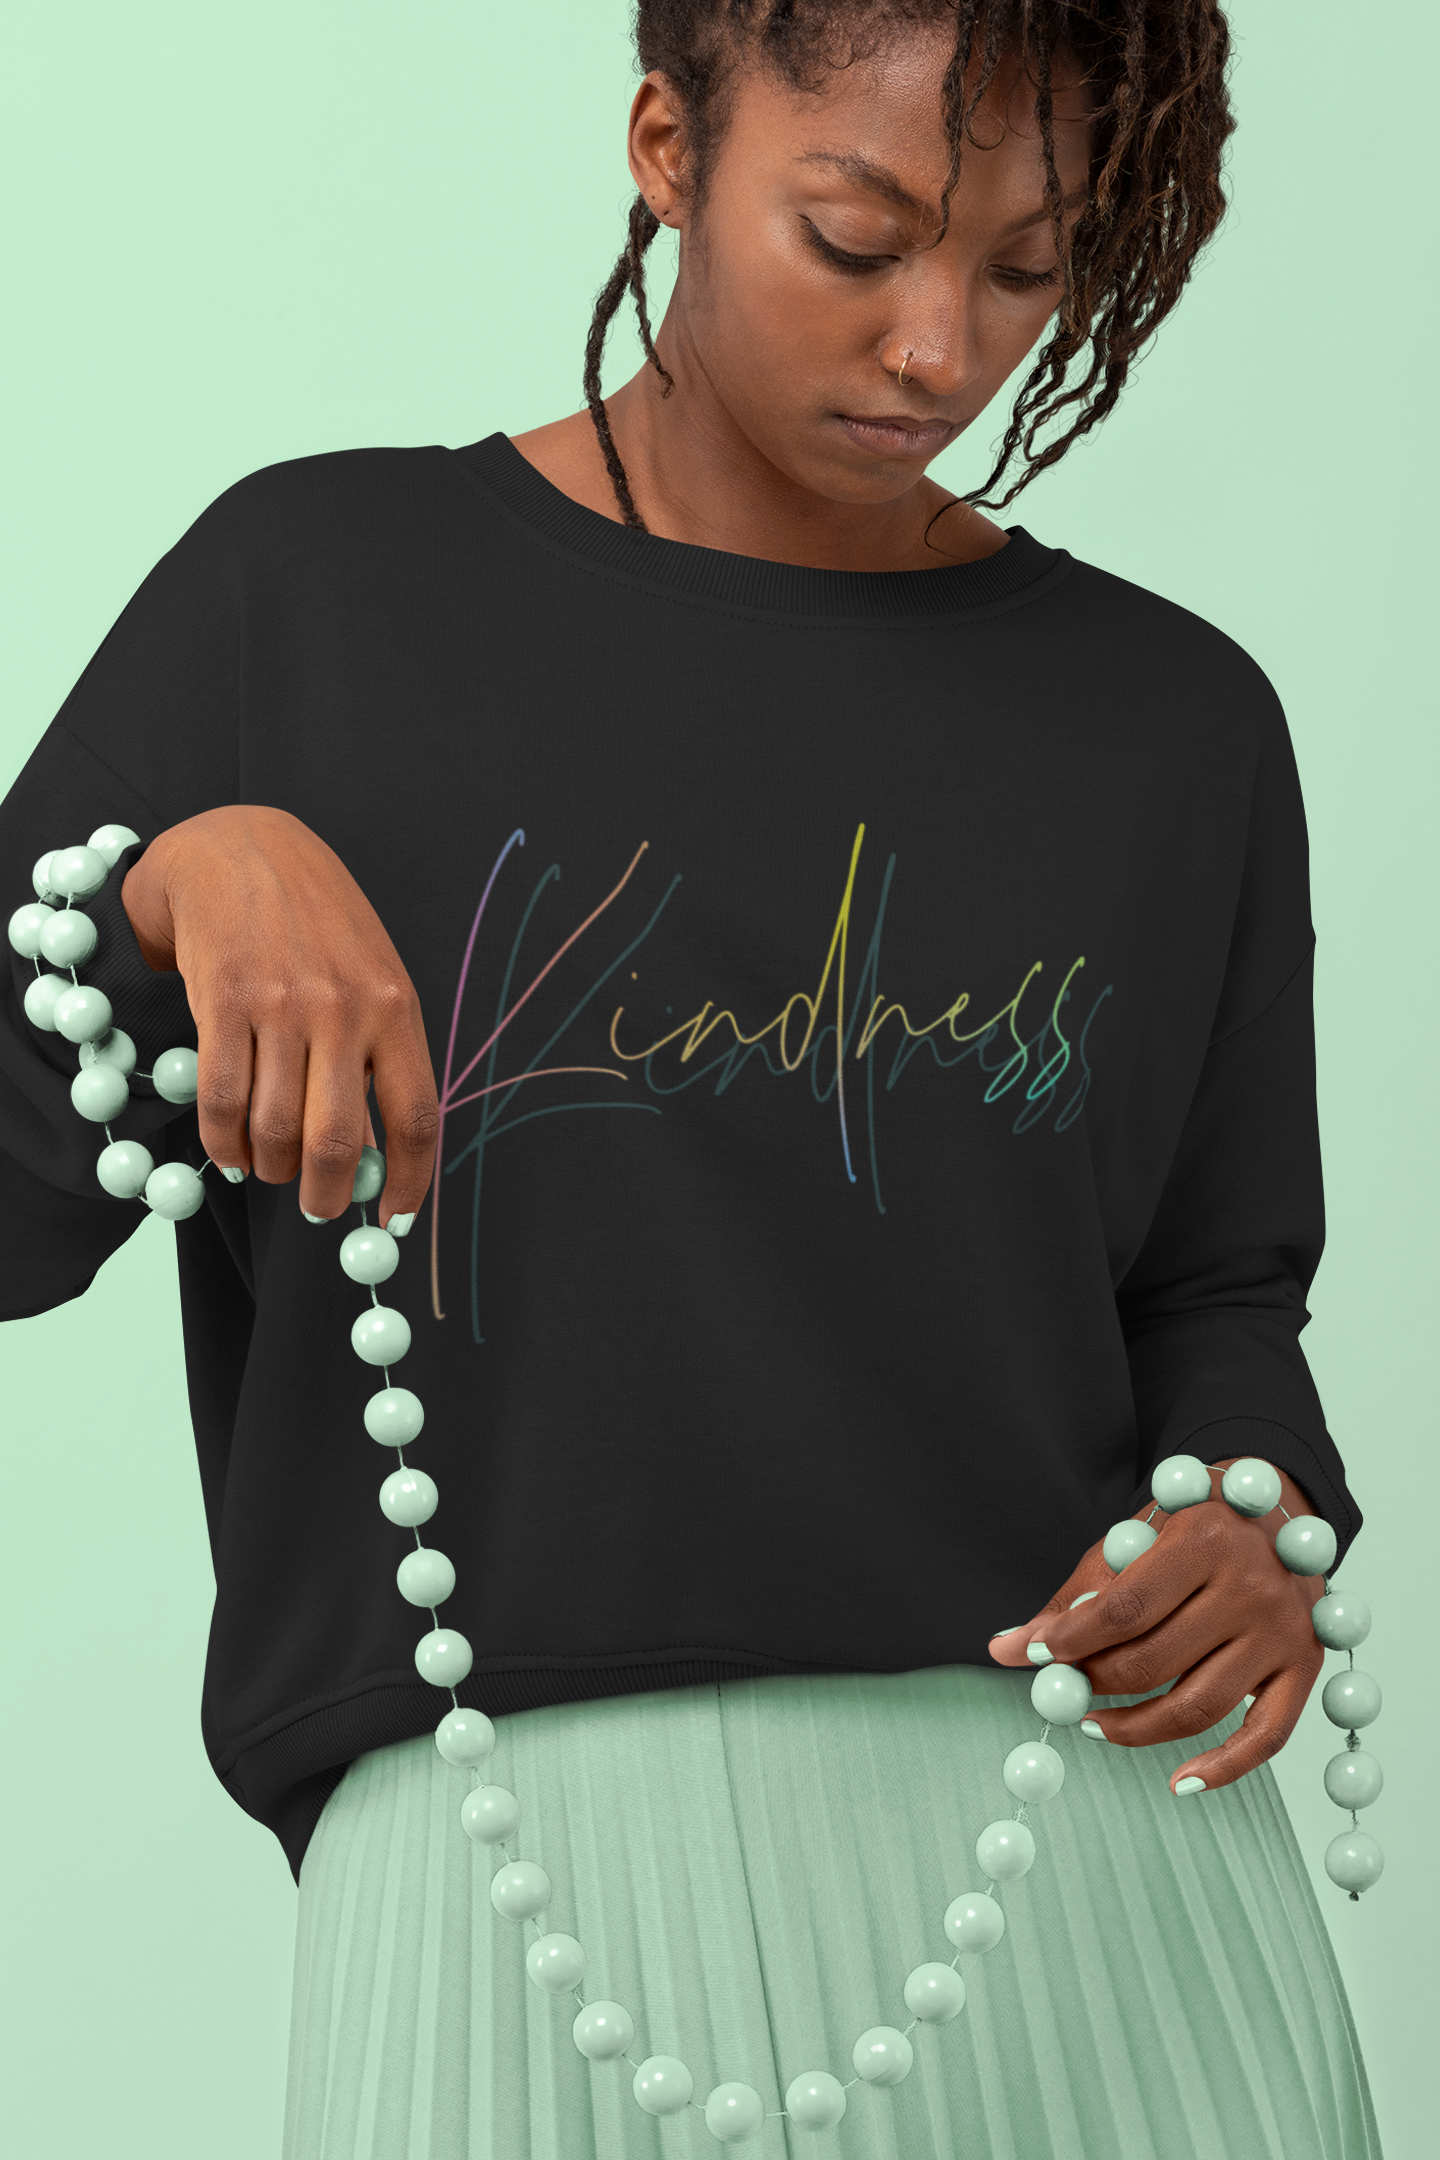 Kindness Sweater, Kindness Inspirational Sweatshirt, Positive Quote Shirt For Women, Unisex Sweater